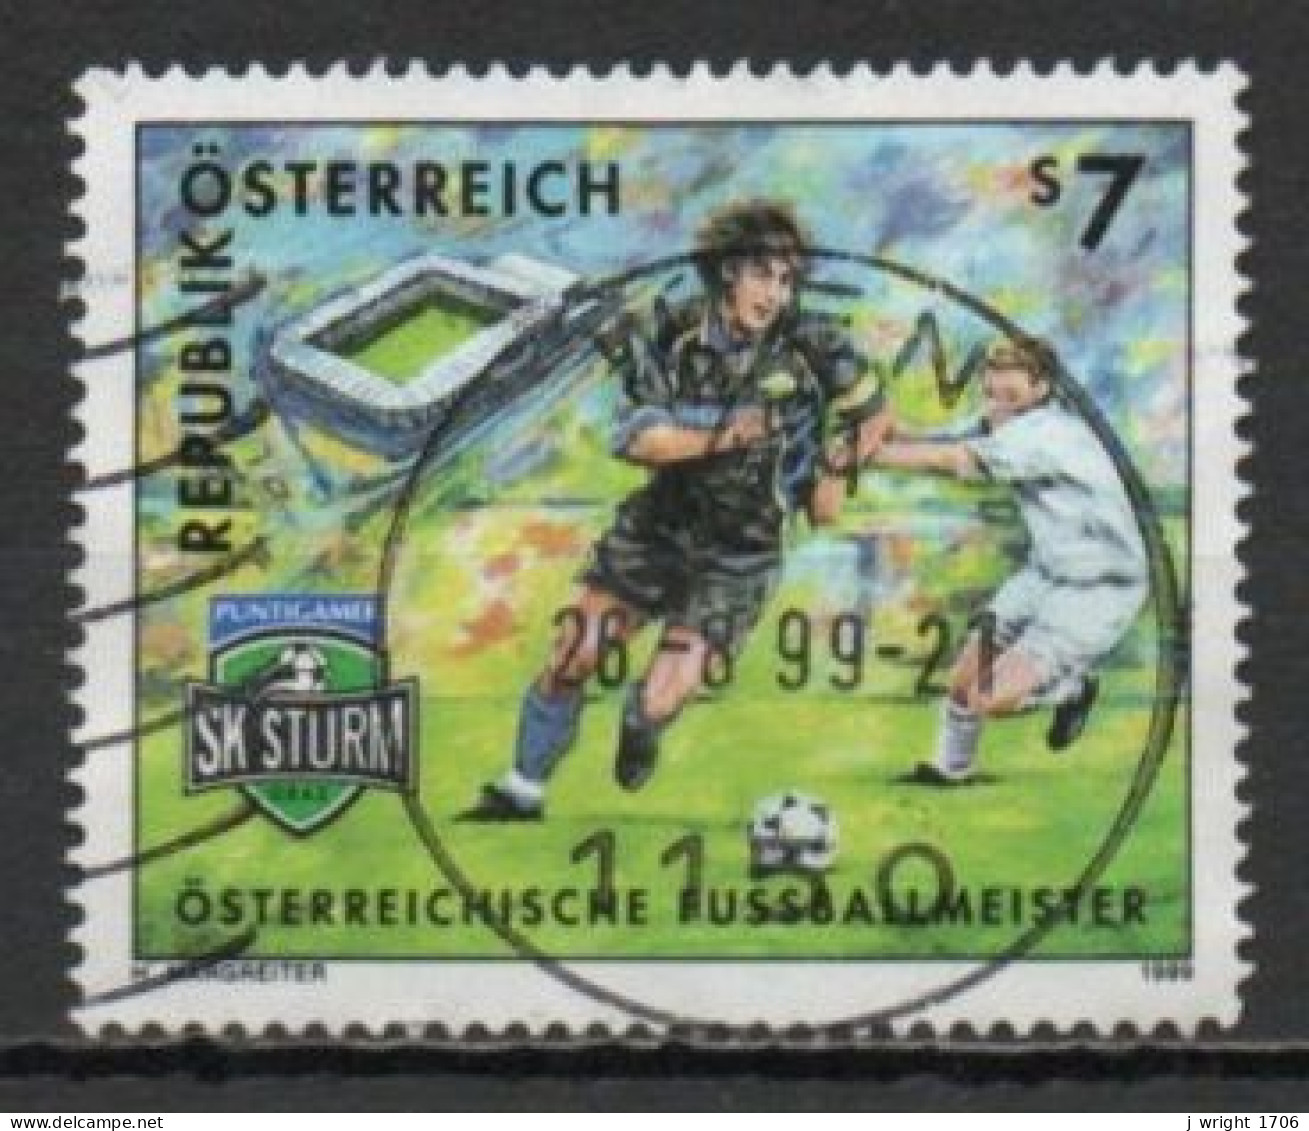 Austria, 1999, SK Puntigamer Sturm Graz Austrian Football Champions, 7s, USED - Gebraucht